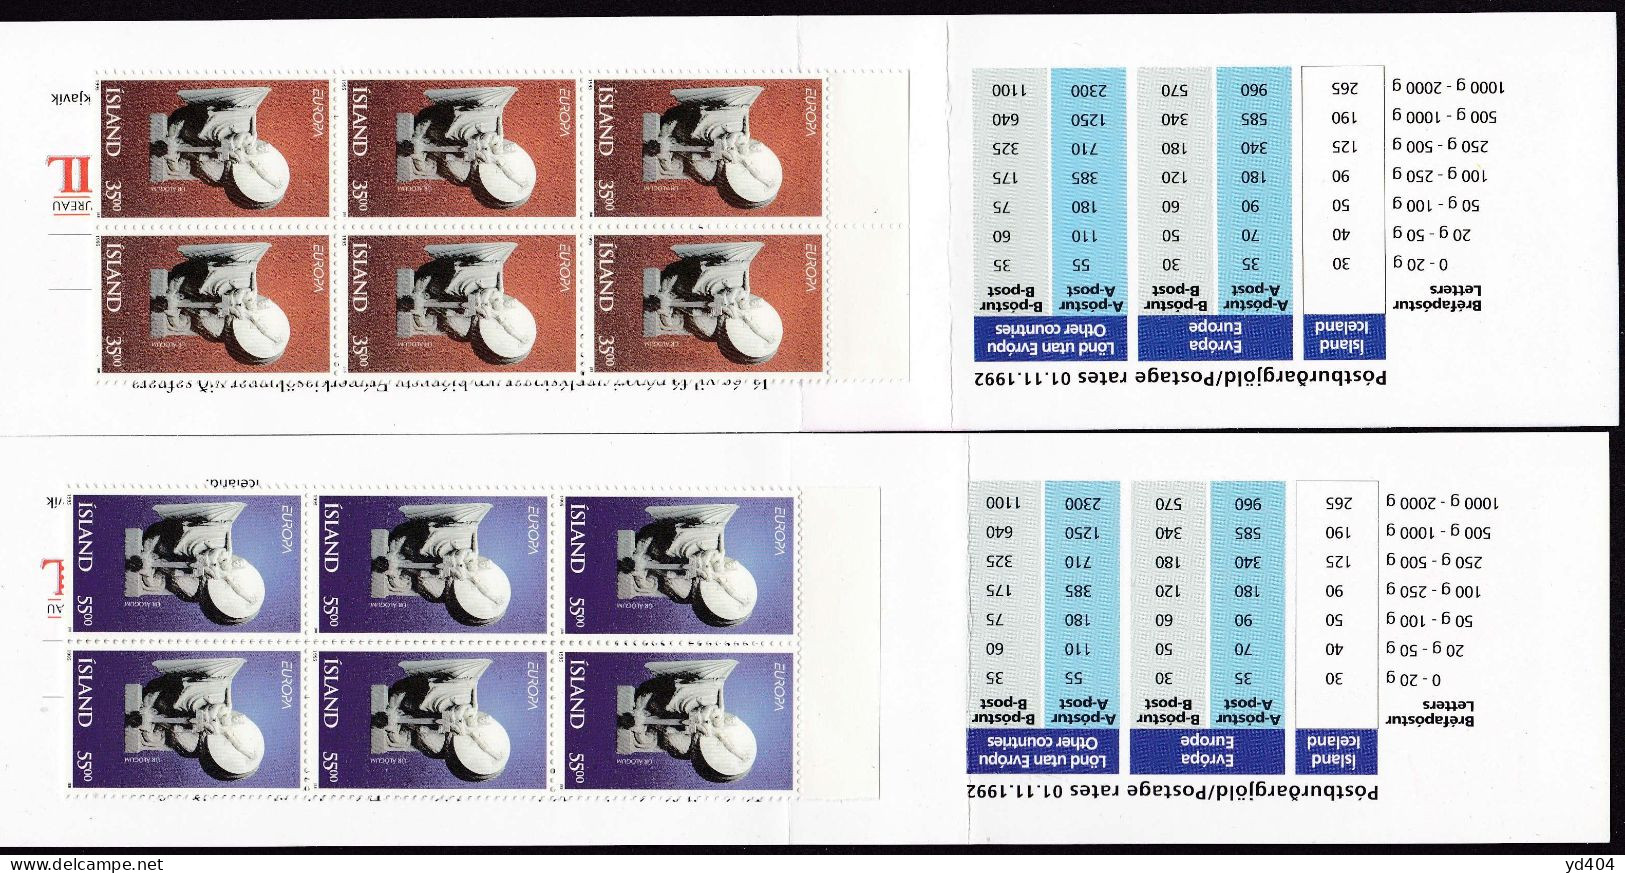 IS668 – ISLANDE - ICELAND - BOOKLETS - 1995 - EUROPA - Y&T # C777/78 MNH 37 € - Libretti